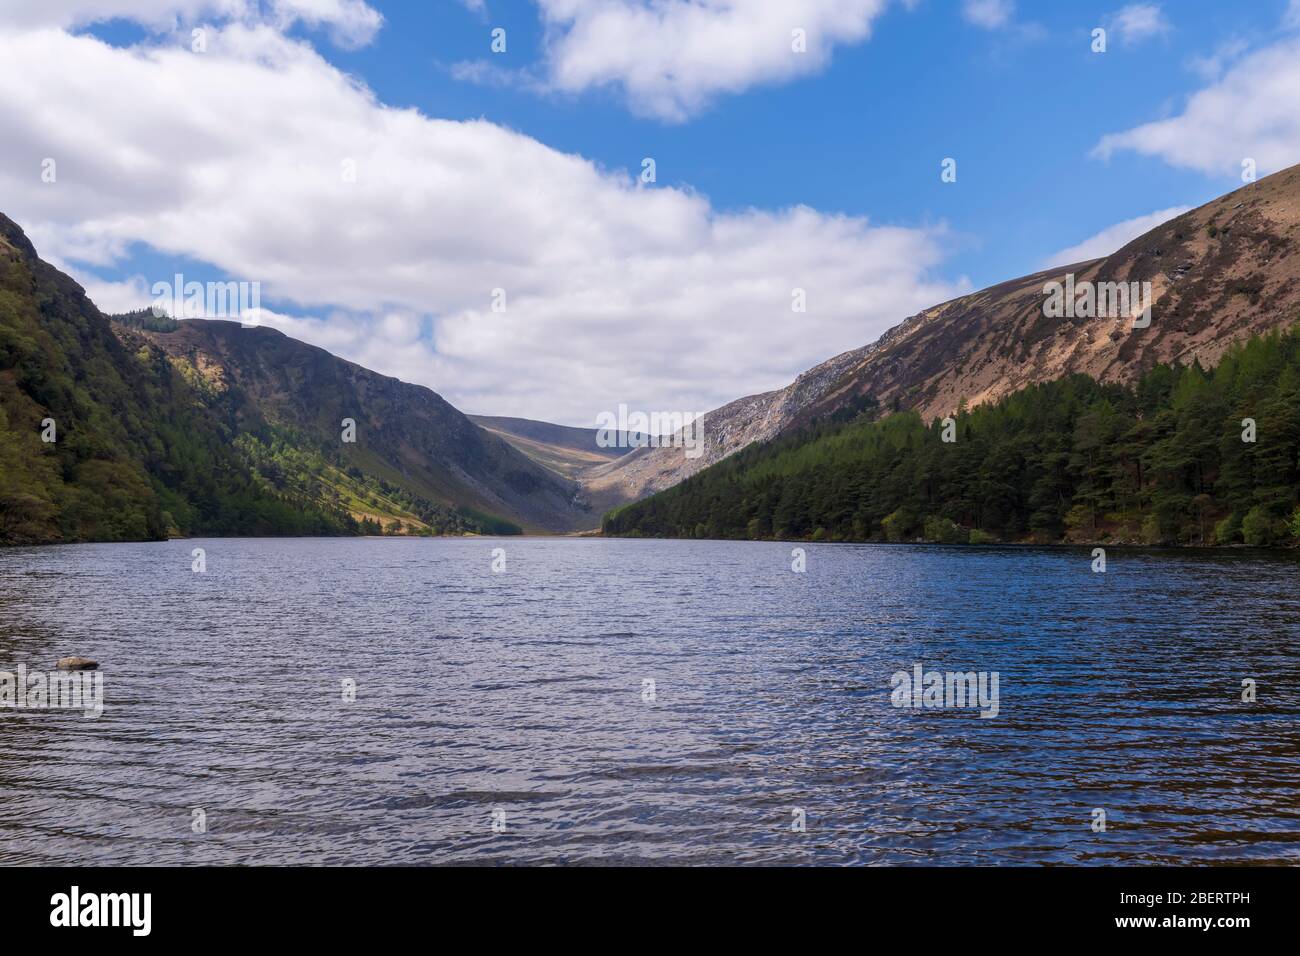 Upper Lake at Glendalough, County Wicklow, Ireland. Stock Photo